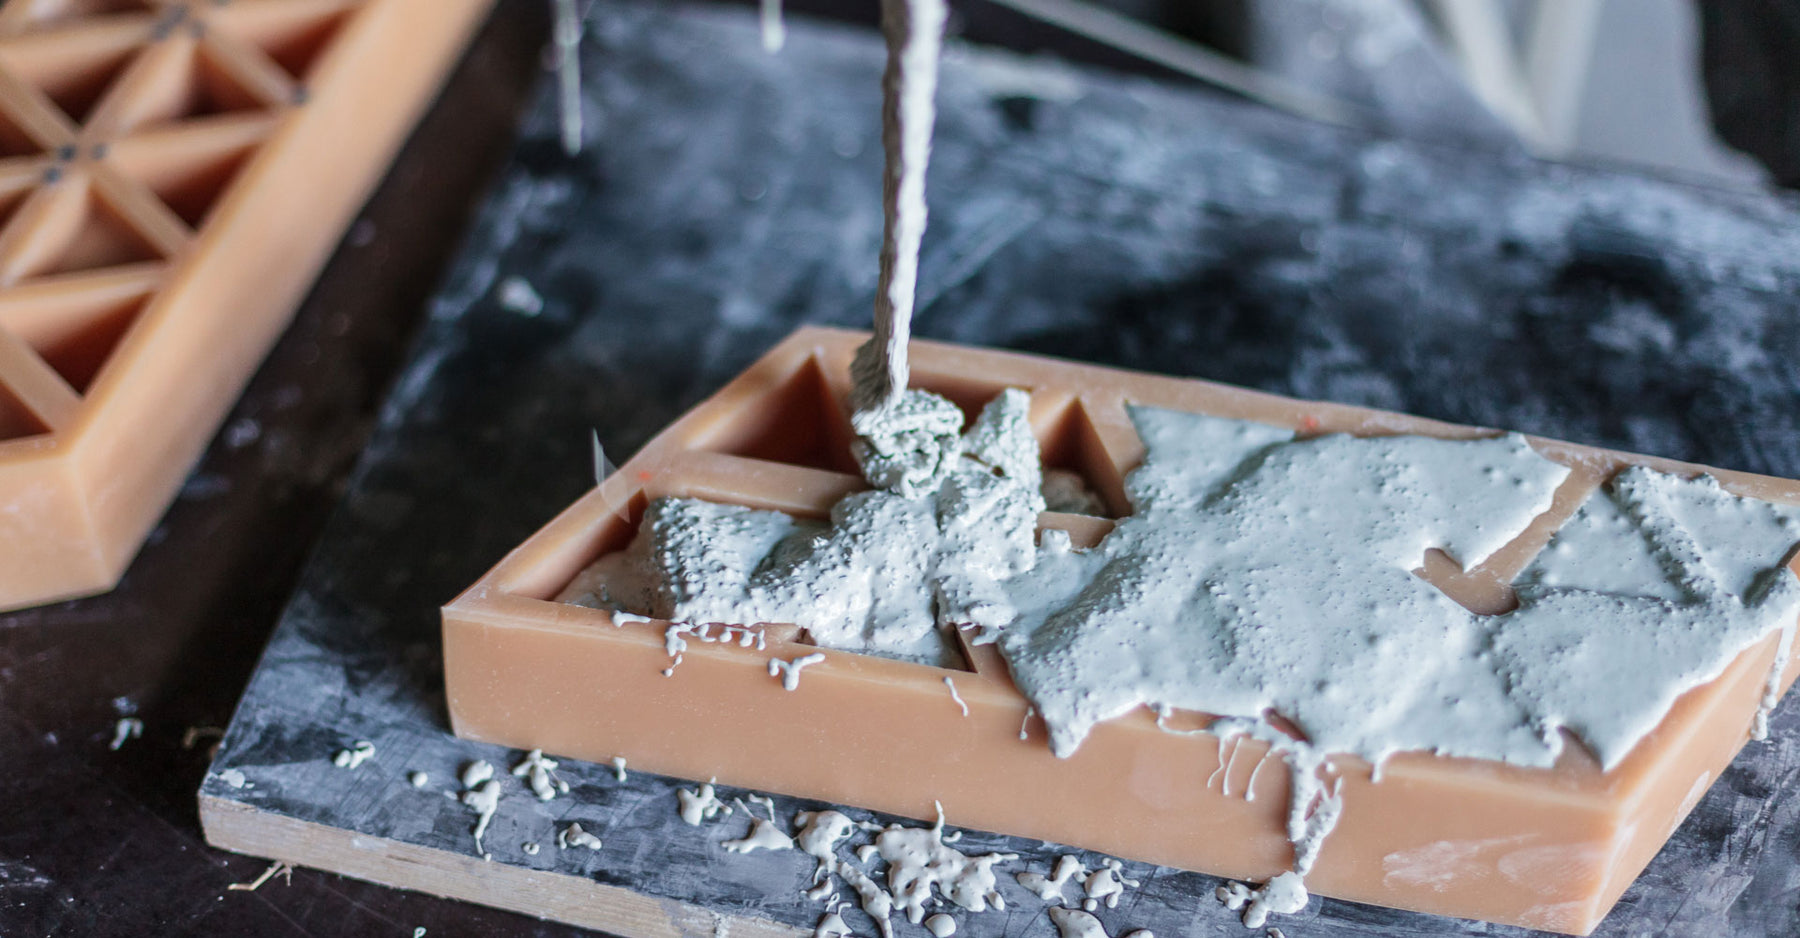 Hand Poured Concrete Into A Silicone Mold